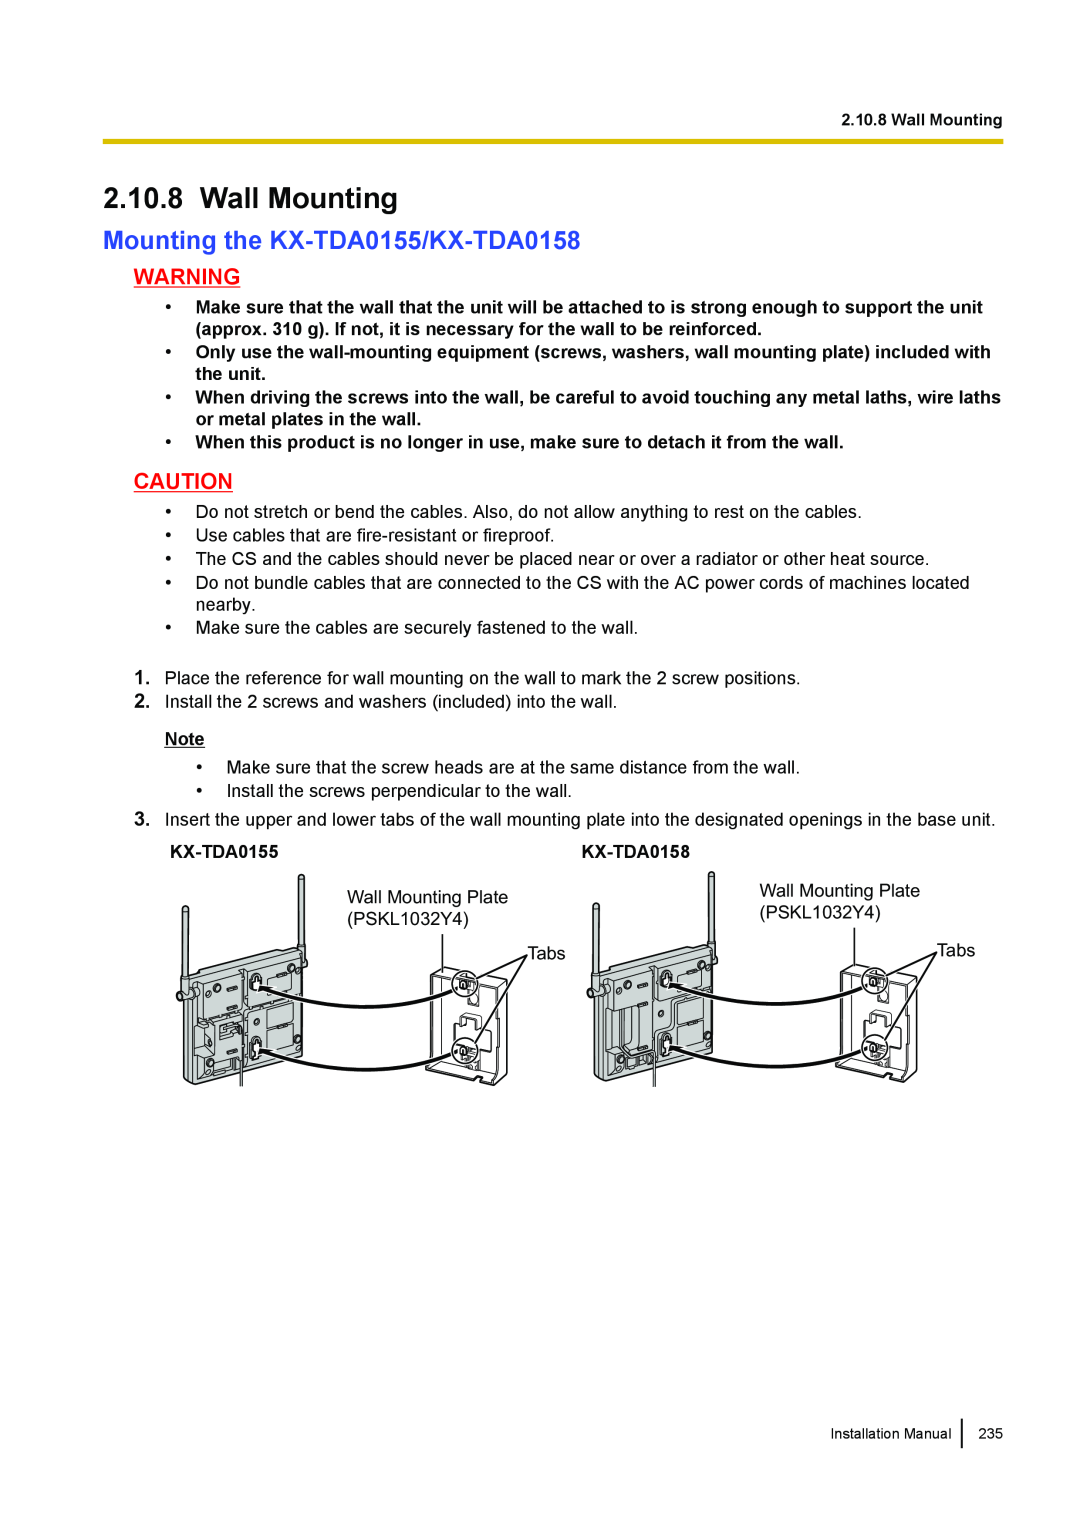 Panasonic KX-TDA100 installation manual Wall Mounting, Mounting the KX-TDA0155/KX-TDA0158 